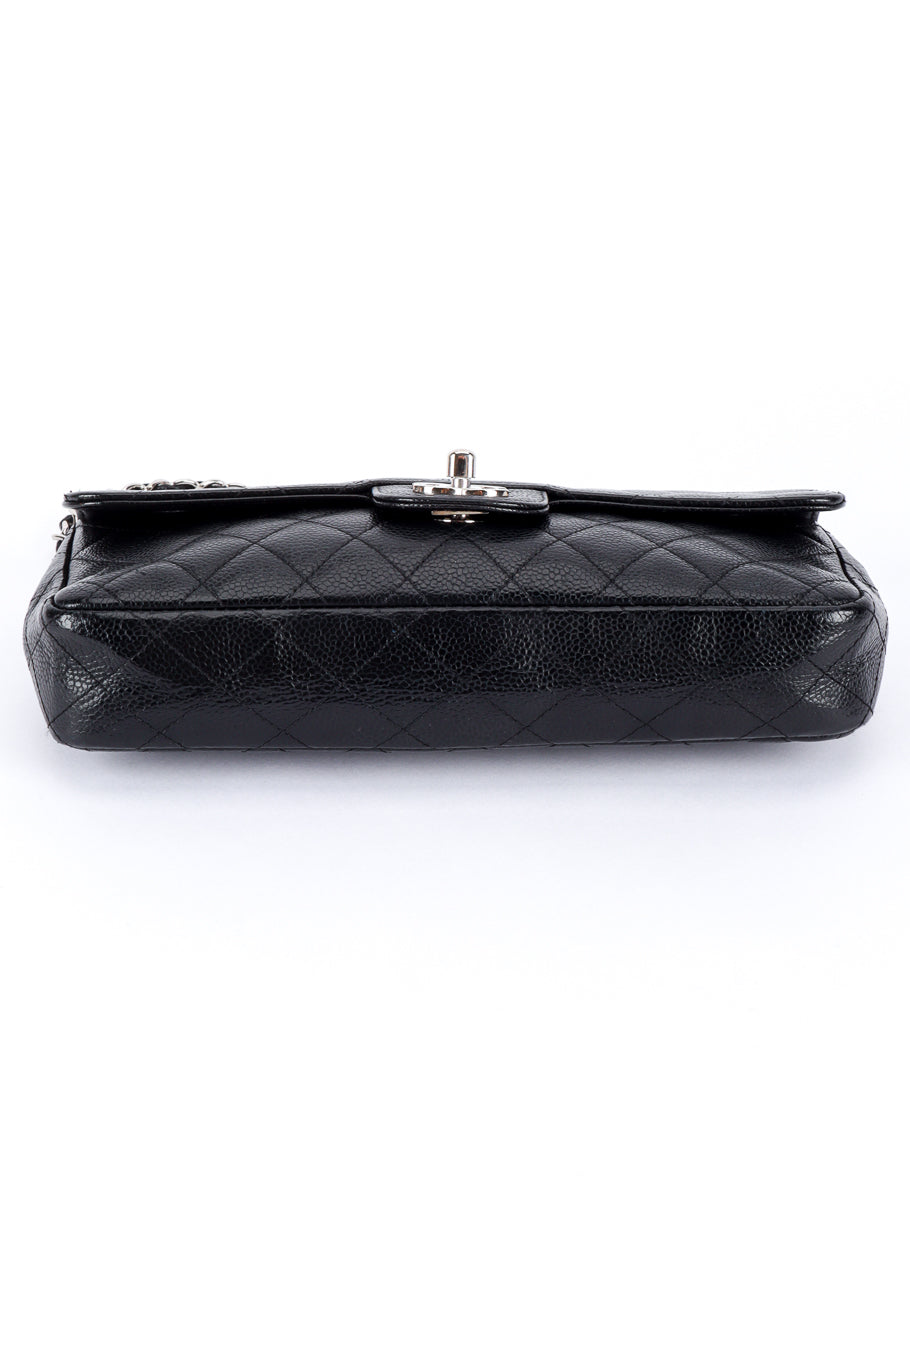 Chanel Classique Diamond Quilted Bag bottom @RECESS LA